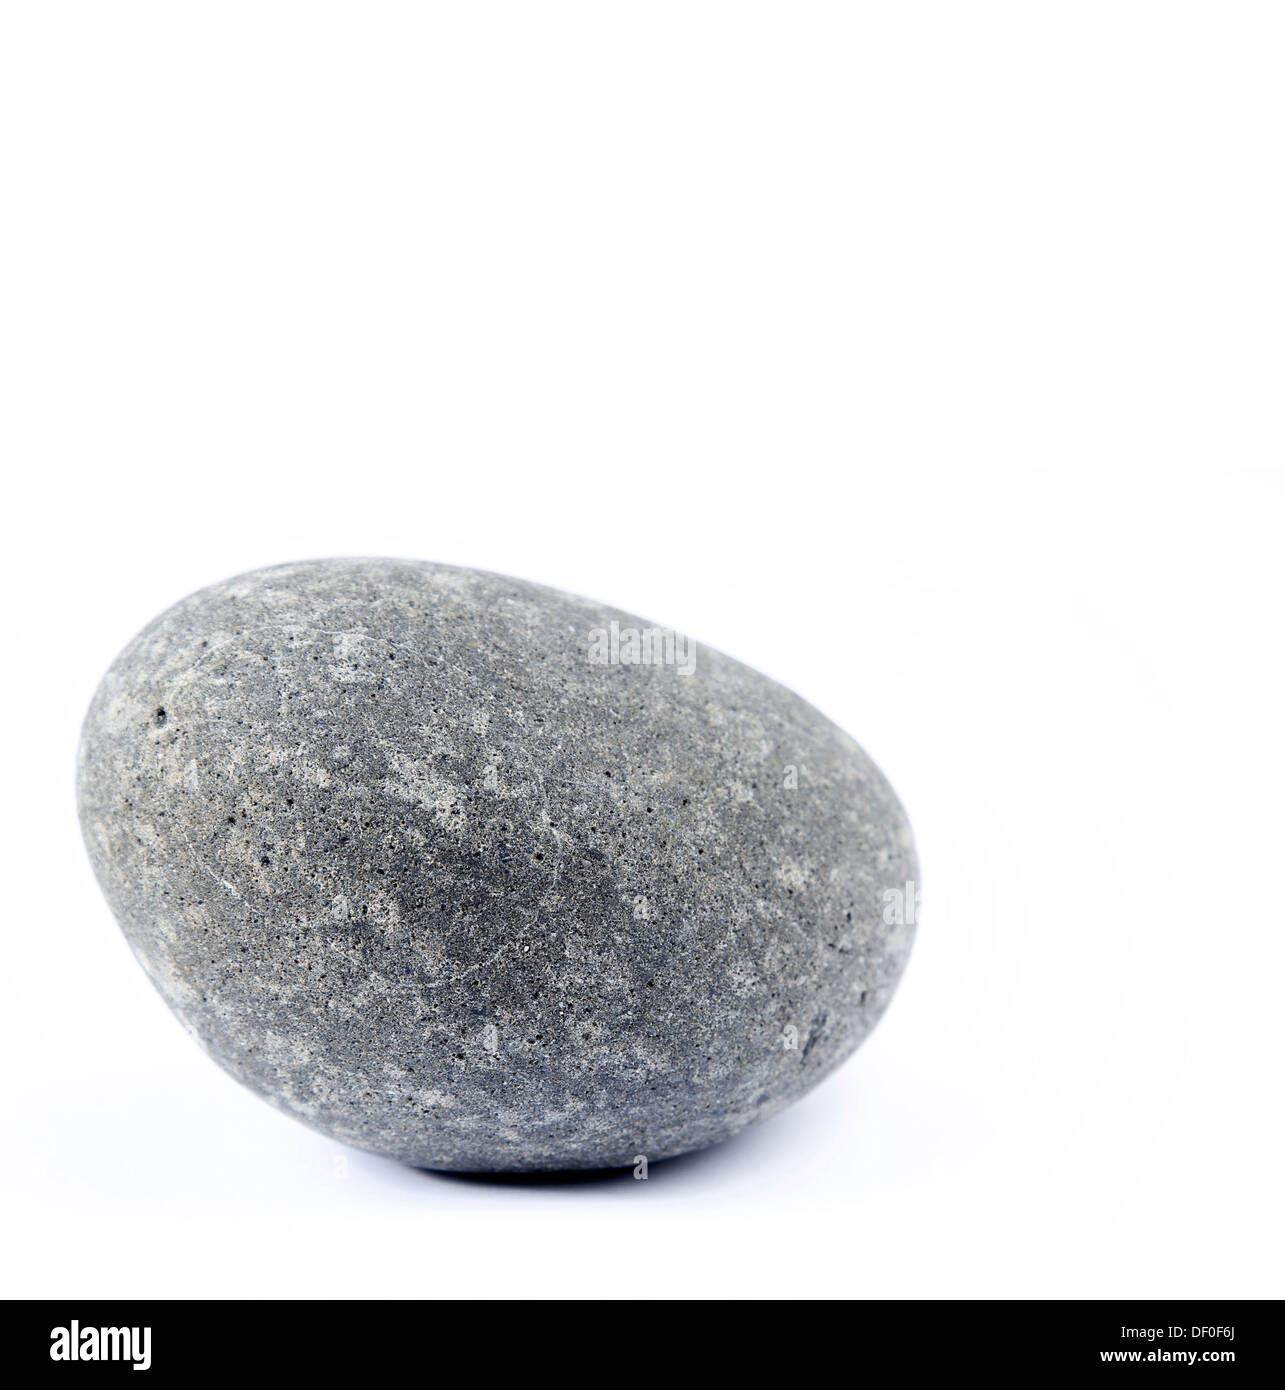 Closeup of one rock on plain background Stock Photo